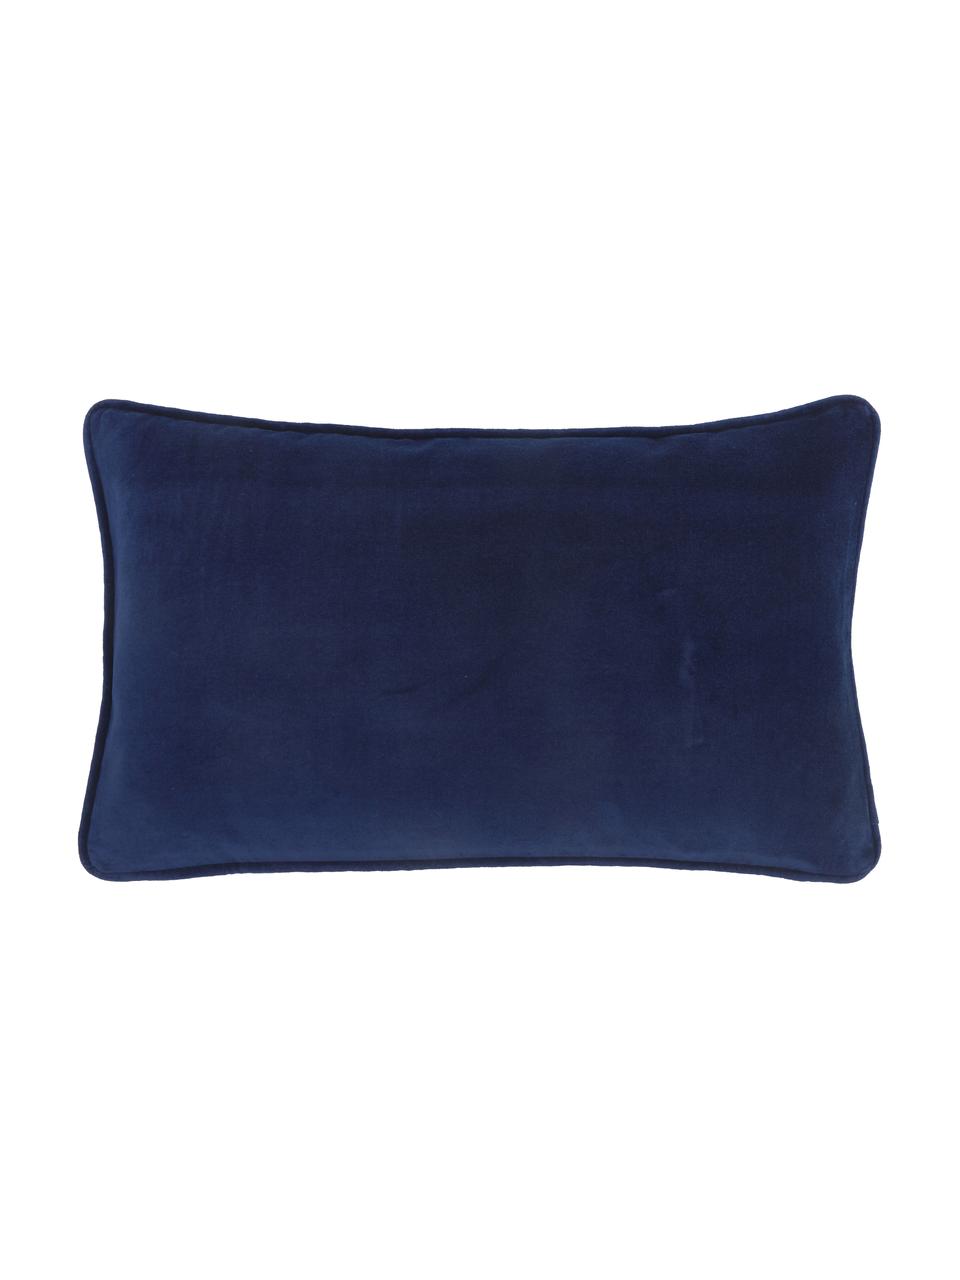 Einfarbige Samt-Kissenhülle Dana in Marineblau, 100% Baumwollsamt, Marineblau, 30 x 50 cm